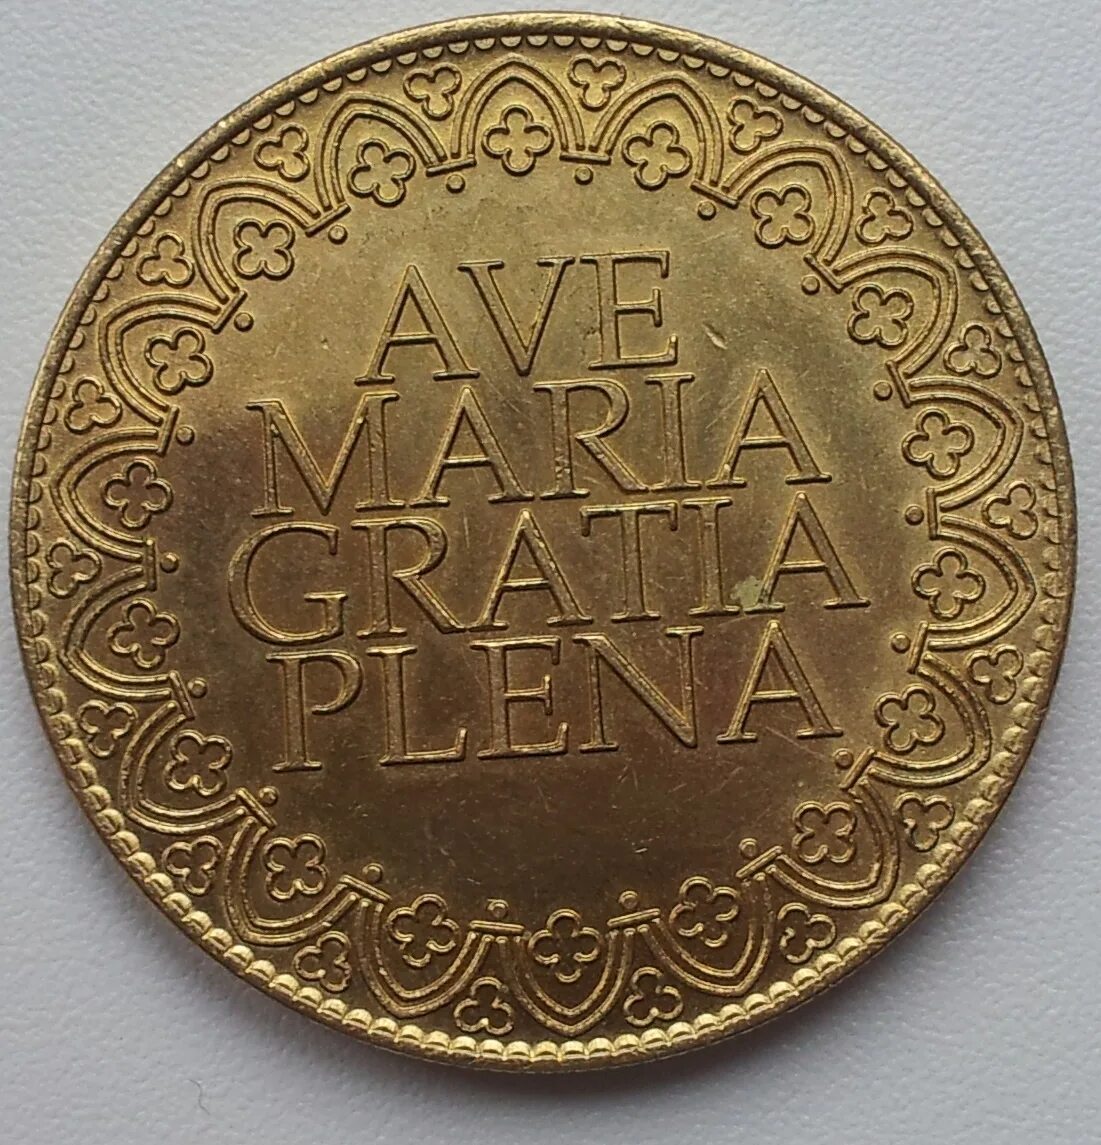 Ave Maria Gratia Plena монета. Монета Cathedrale notre-Dame de Paris. Монета CAFEDALE notre Dame de Paris. Монета notre-Dame de Paris 2012.